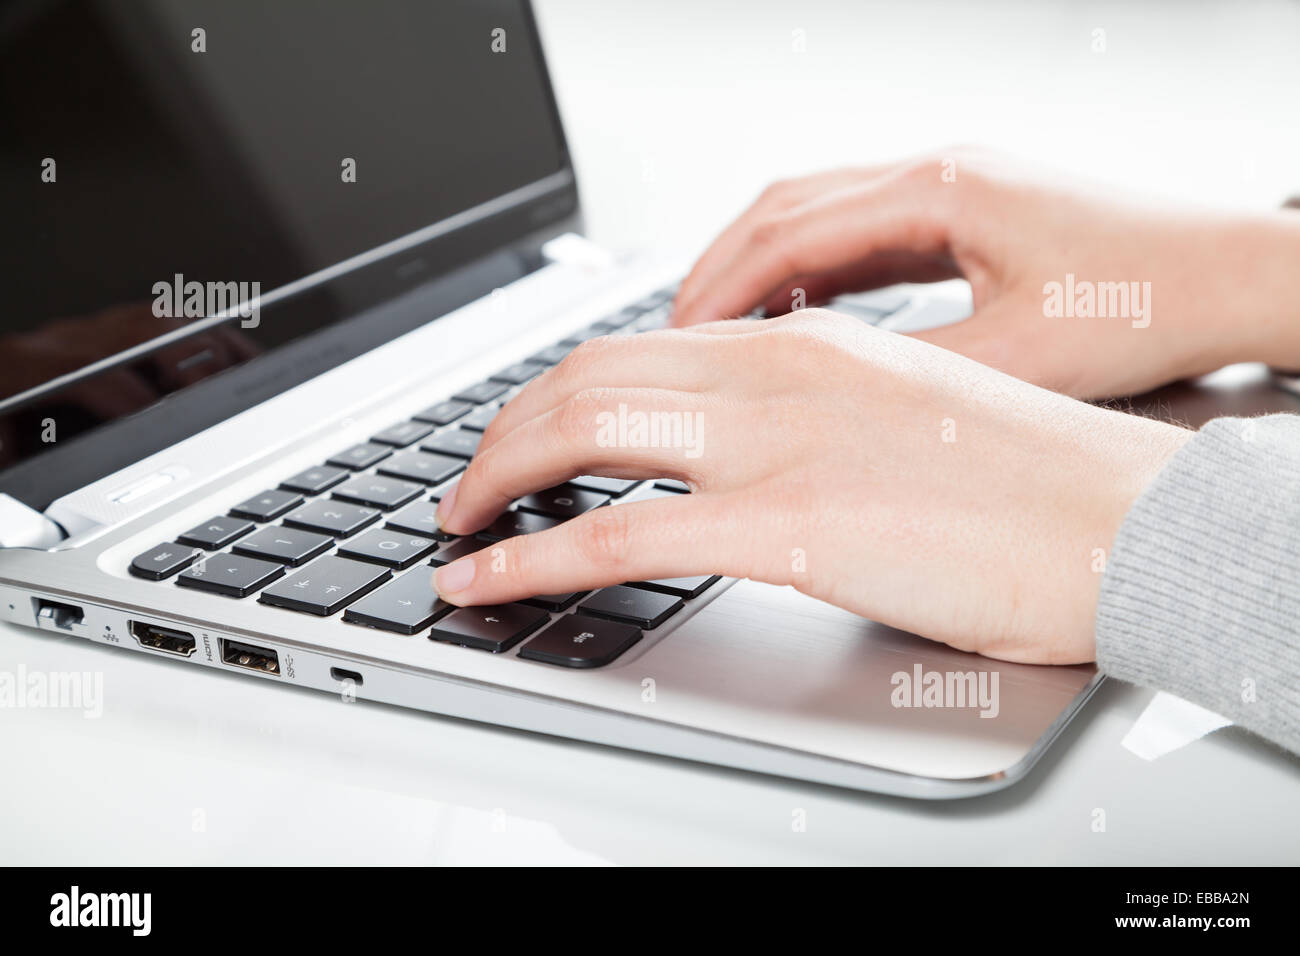 woman using laptop on white desk Stock Photo